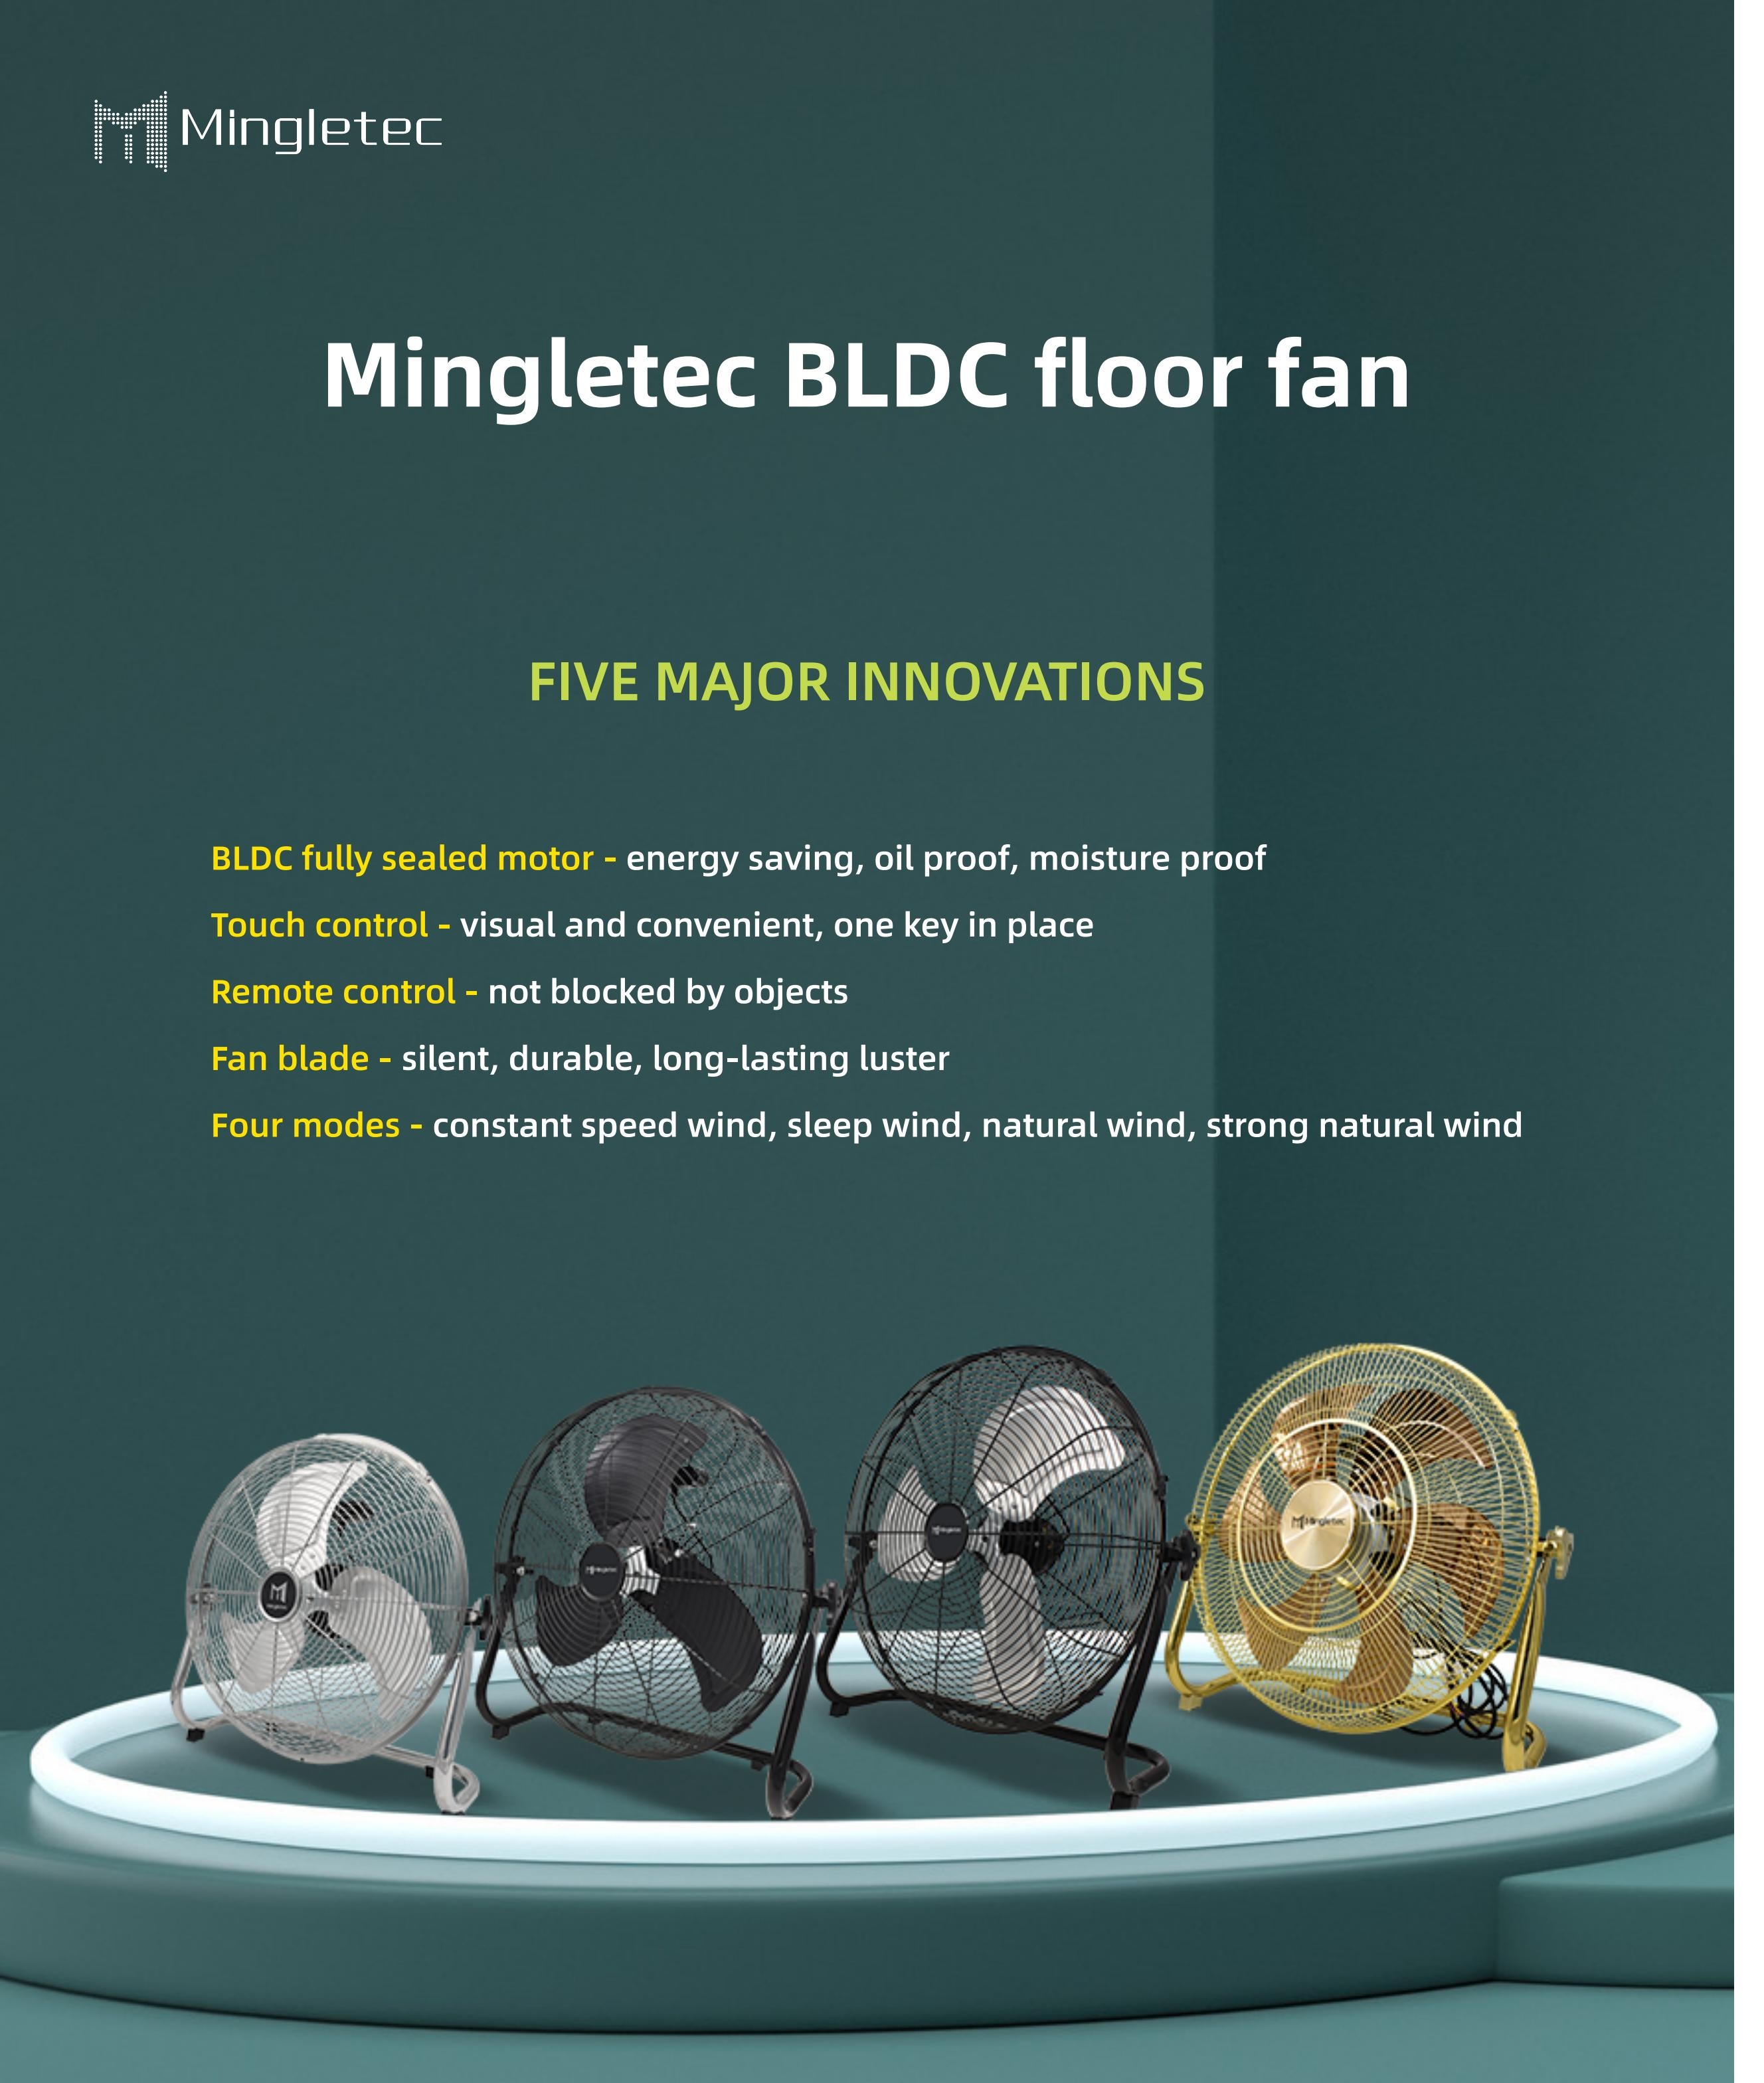 BLDC floor fan poster